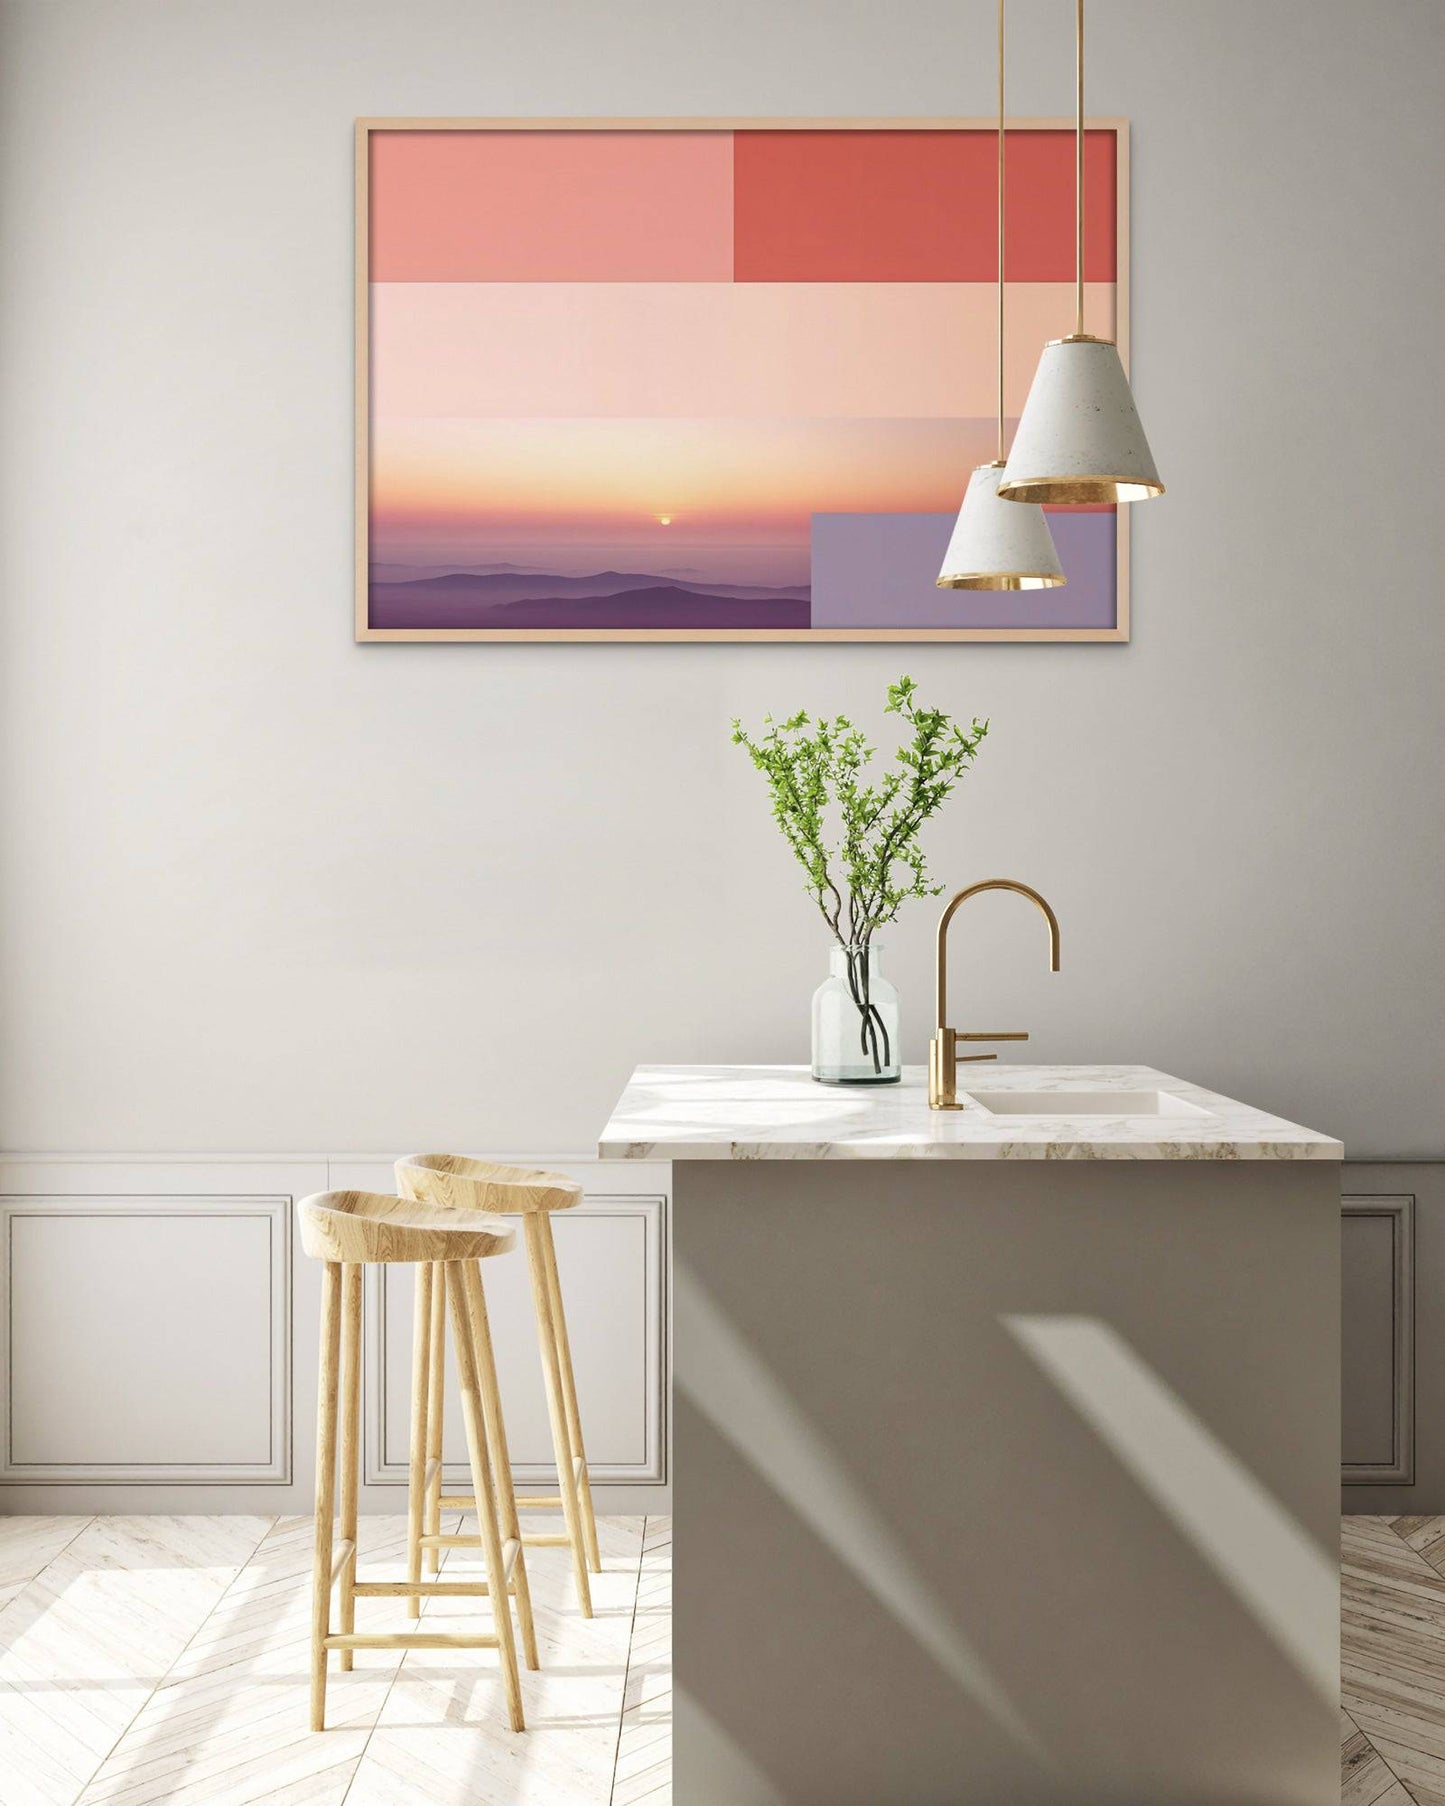 Sunset Odyssey #614782 - Pixel Gallery